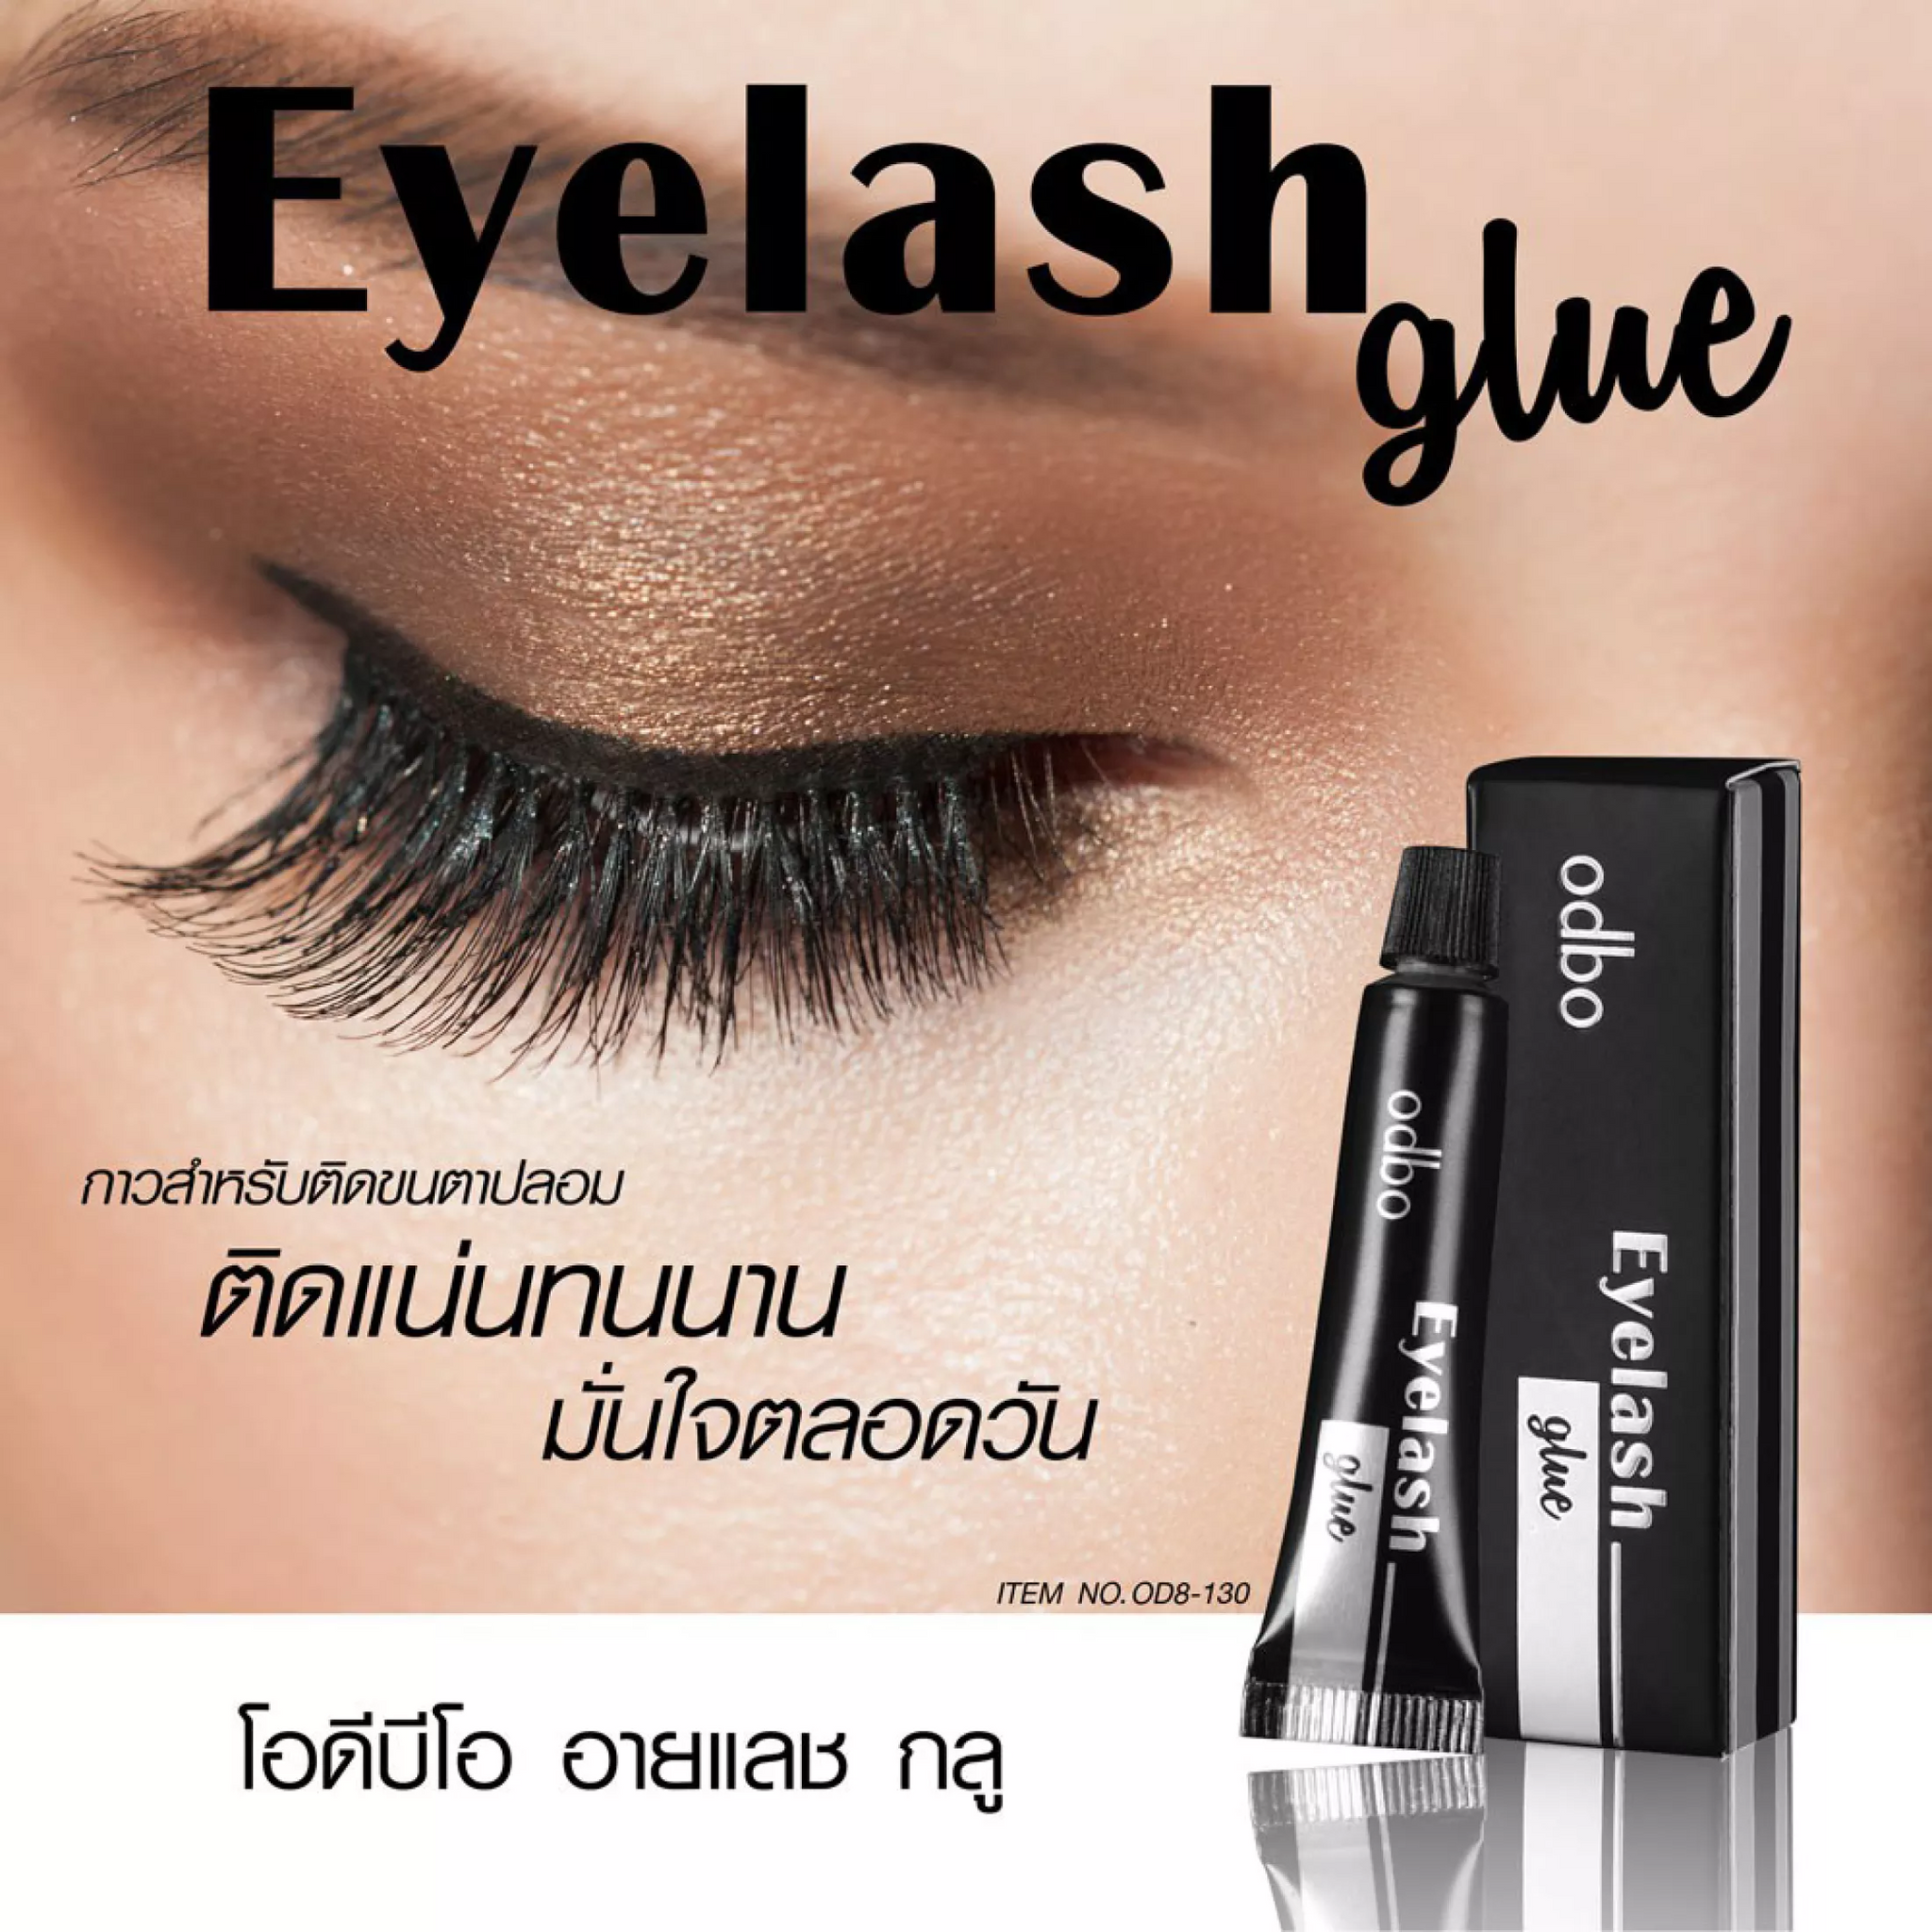 Odbo Eyelash Glue #OD8-130 : โอดีบีโอ กาว กาวติดขนตาปลอม x 1 ชิ้น